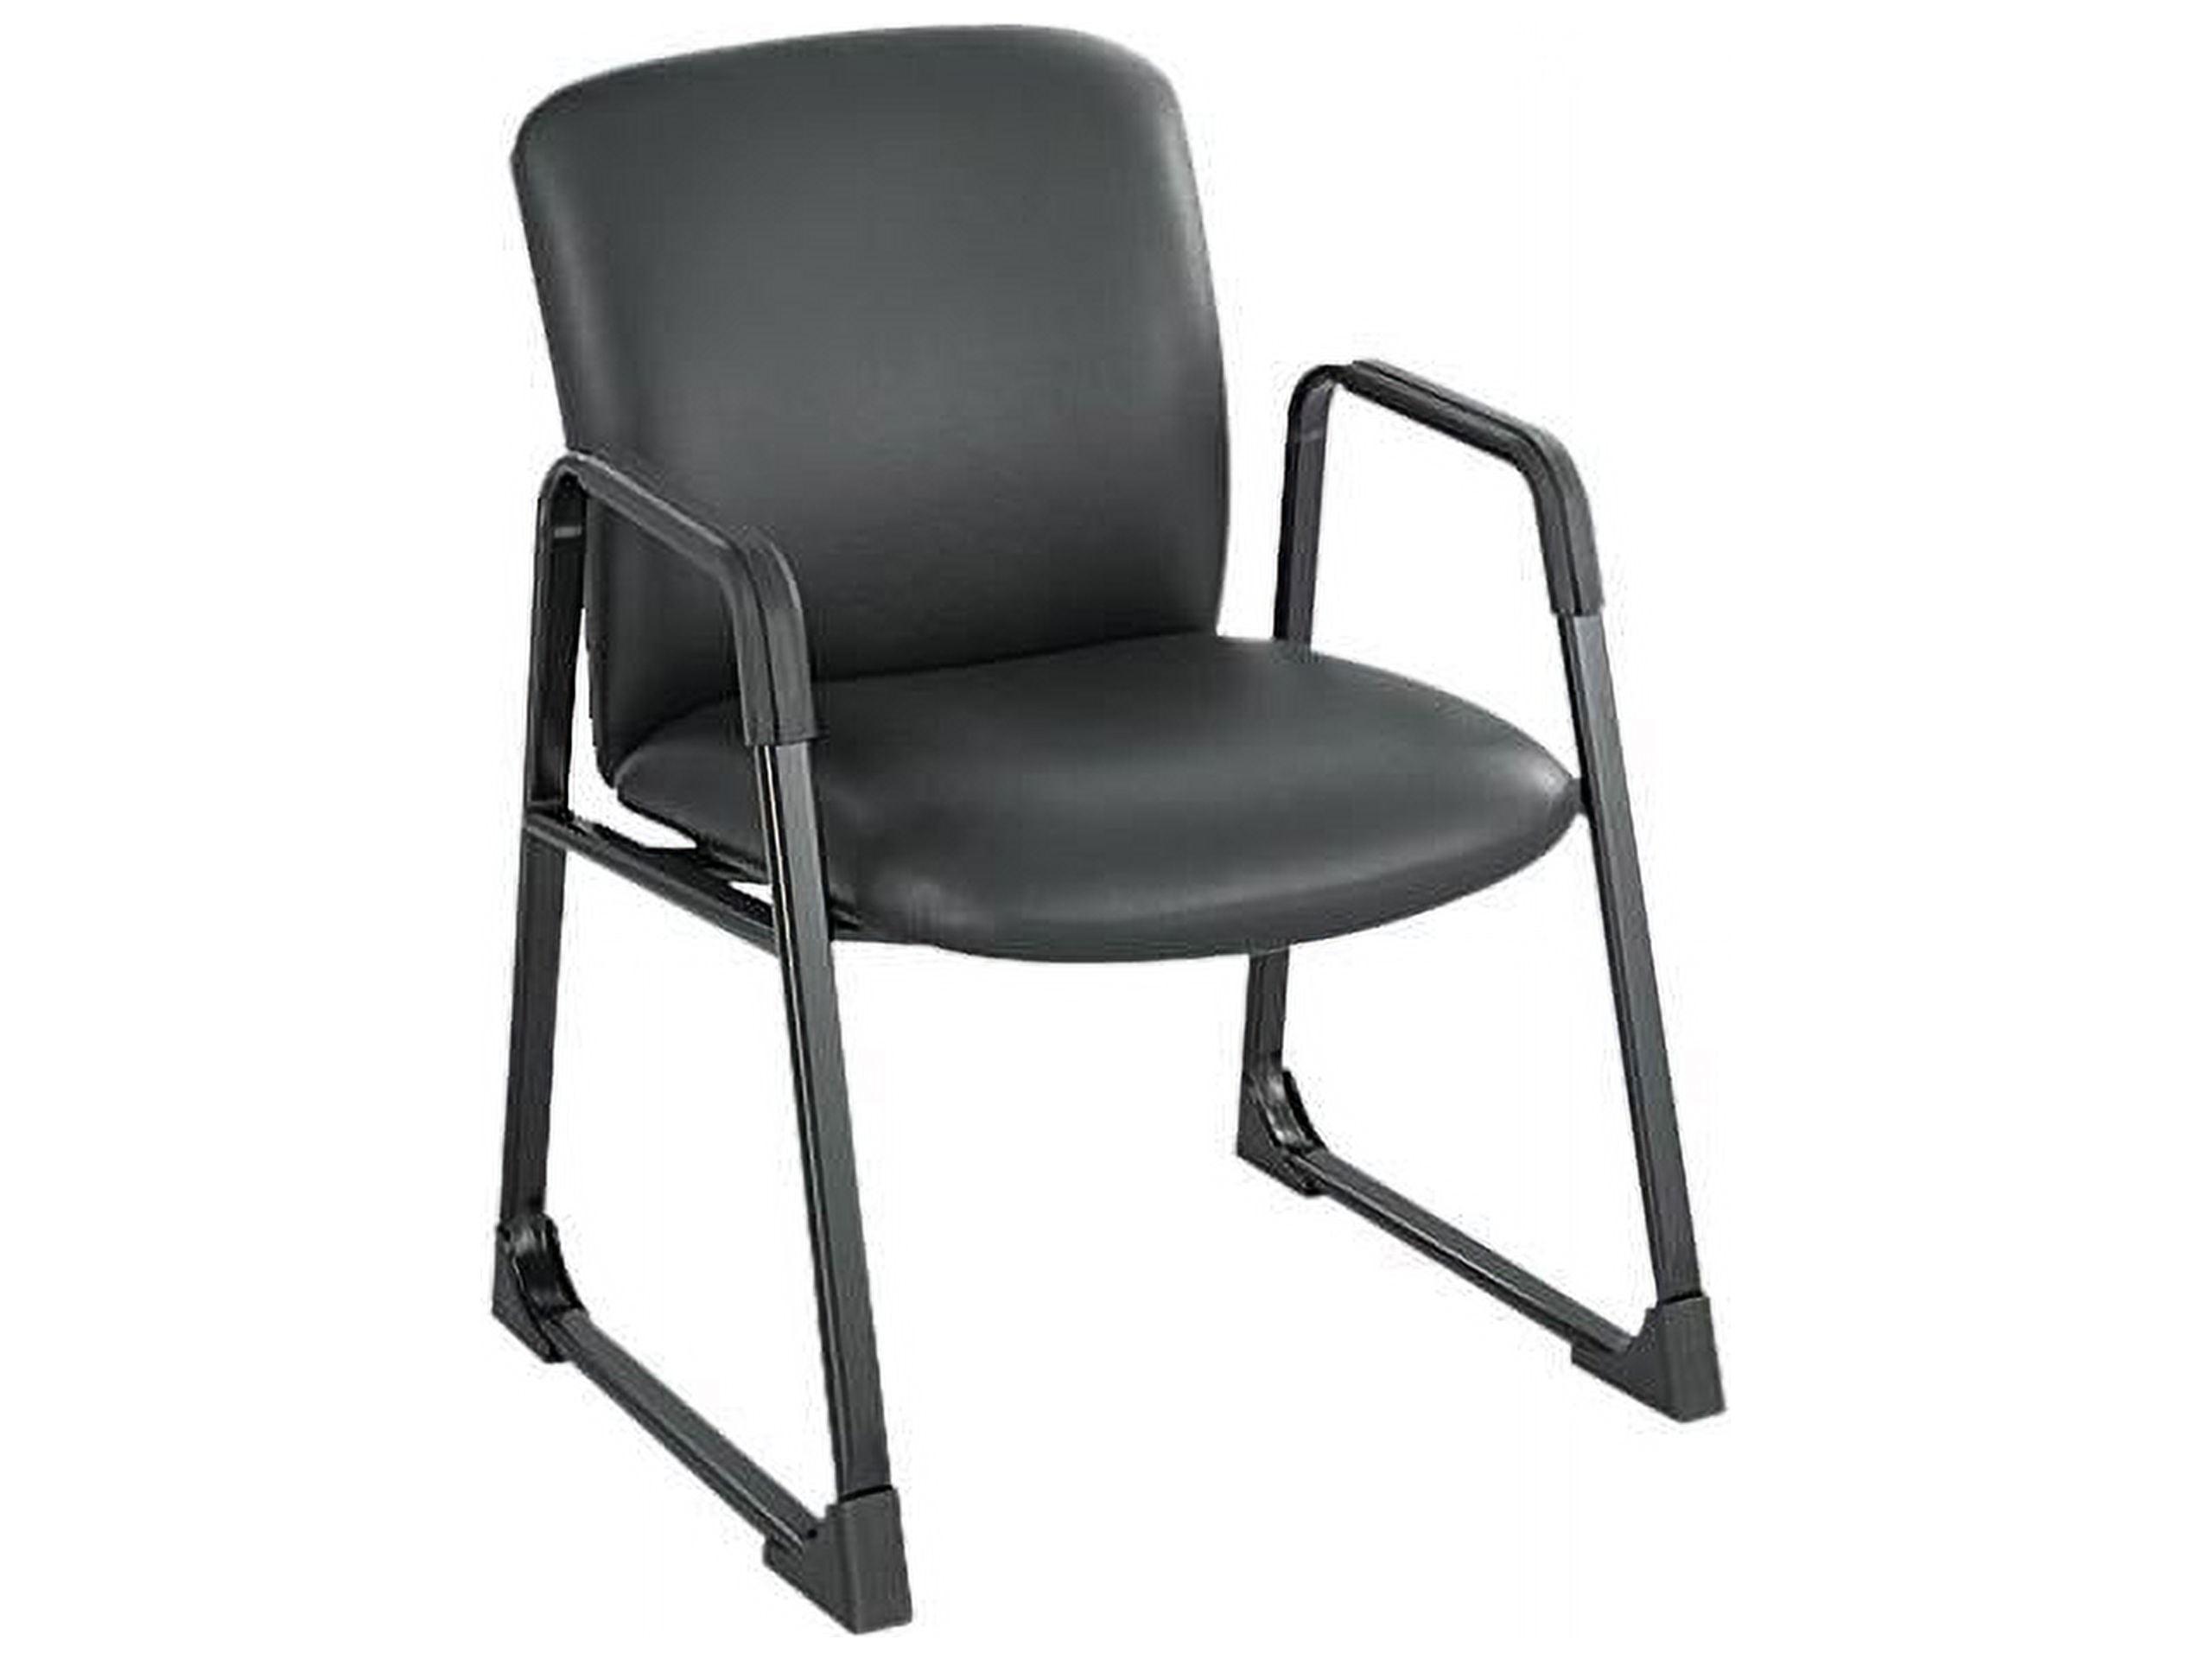 Max Comfort 500 lb Black Vinyl and Steel Swivel Guest Chair